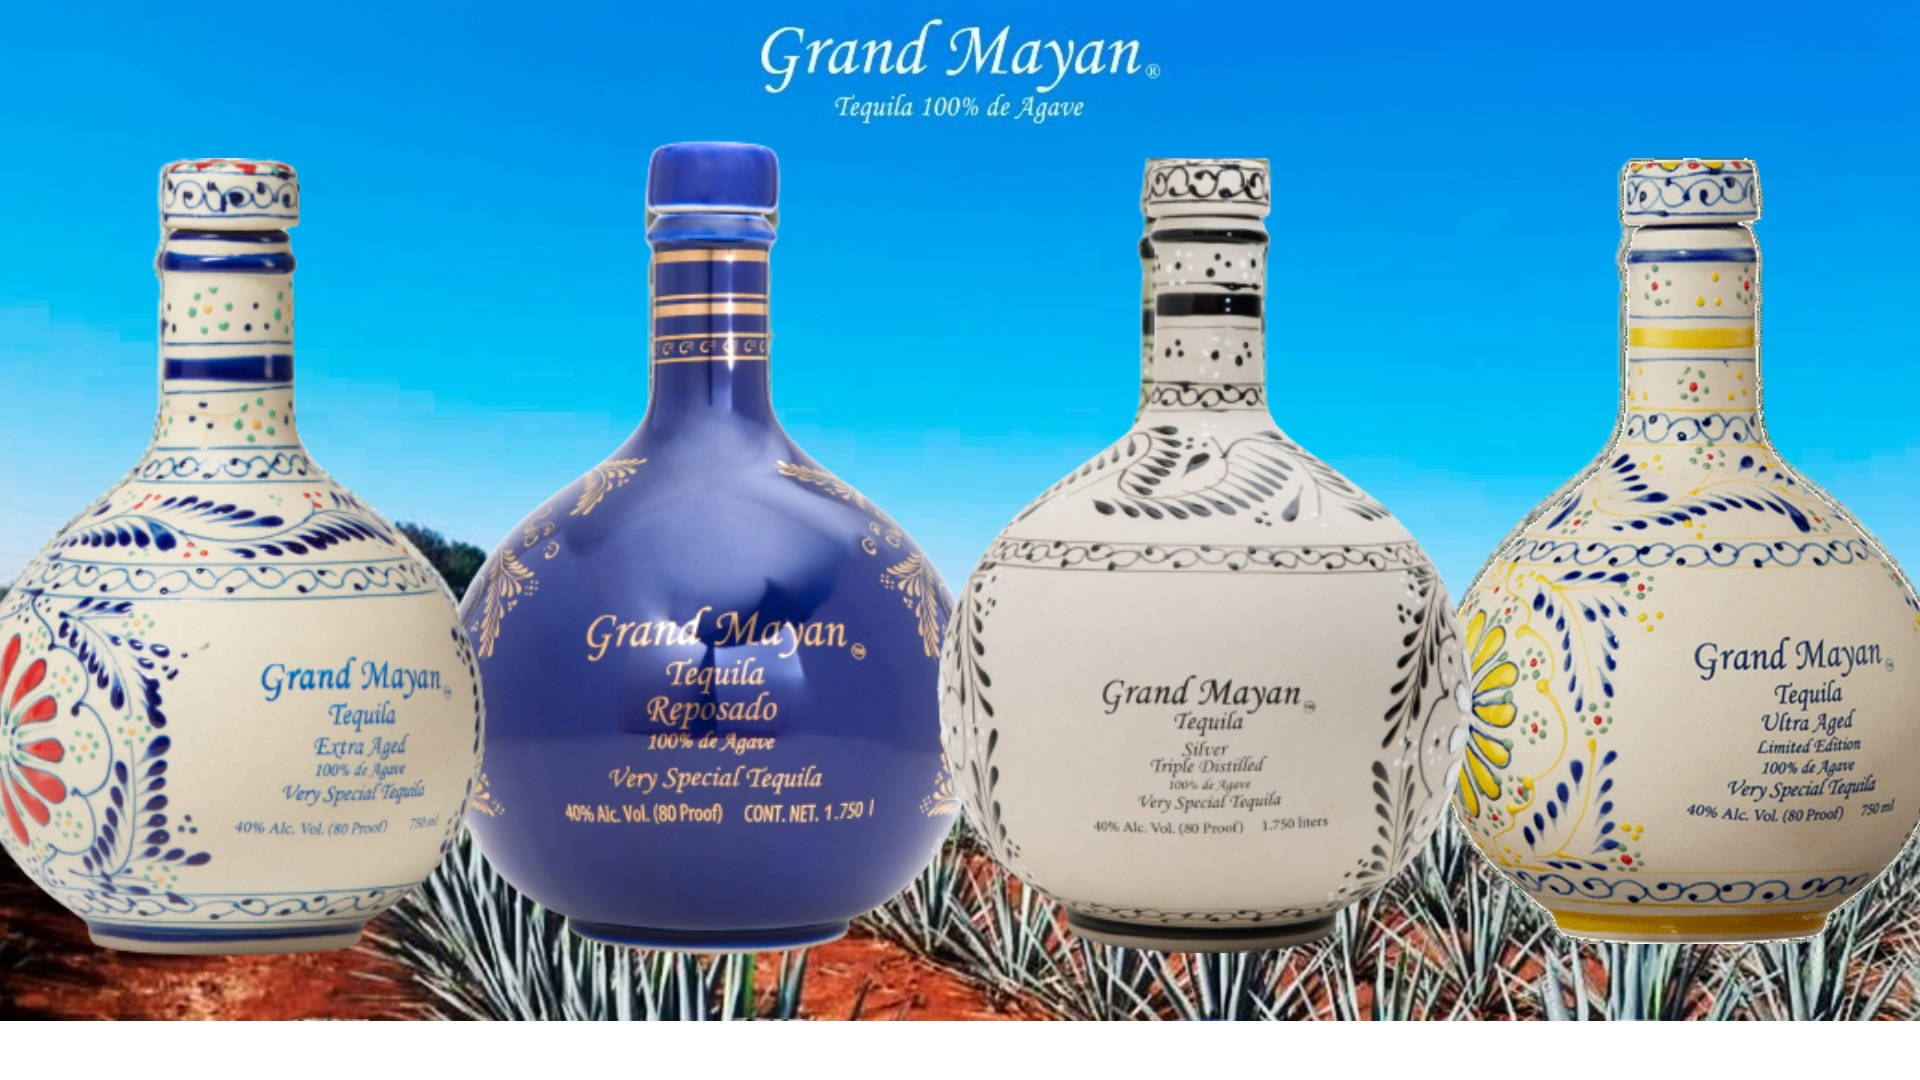 Grand Mayan Tequila Bottles Edited Photo Wallpaper